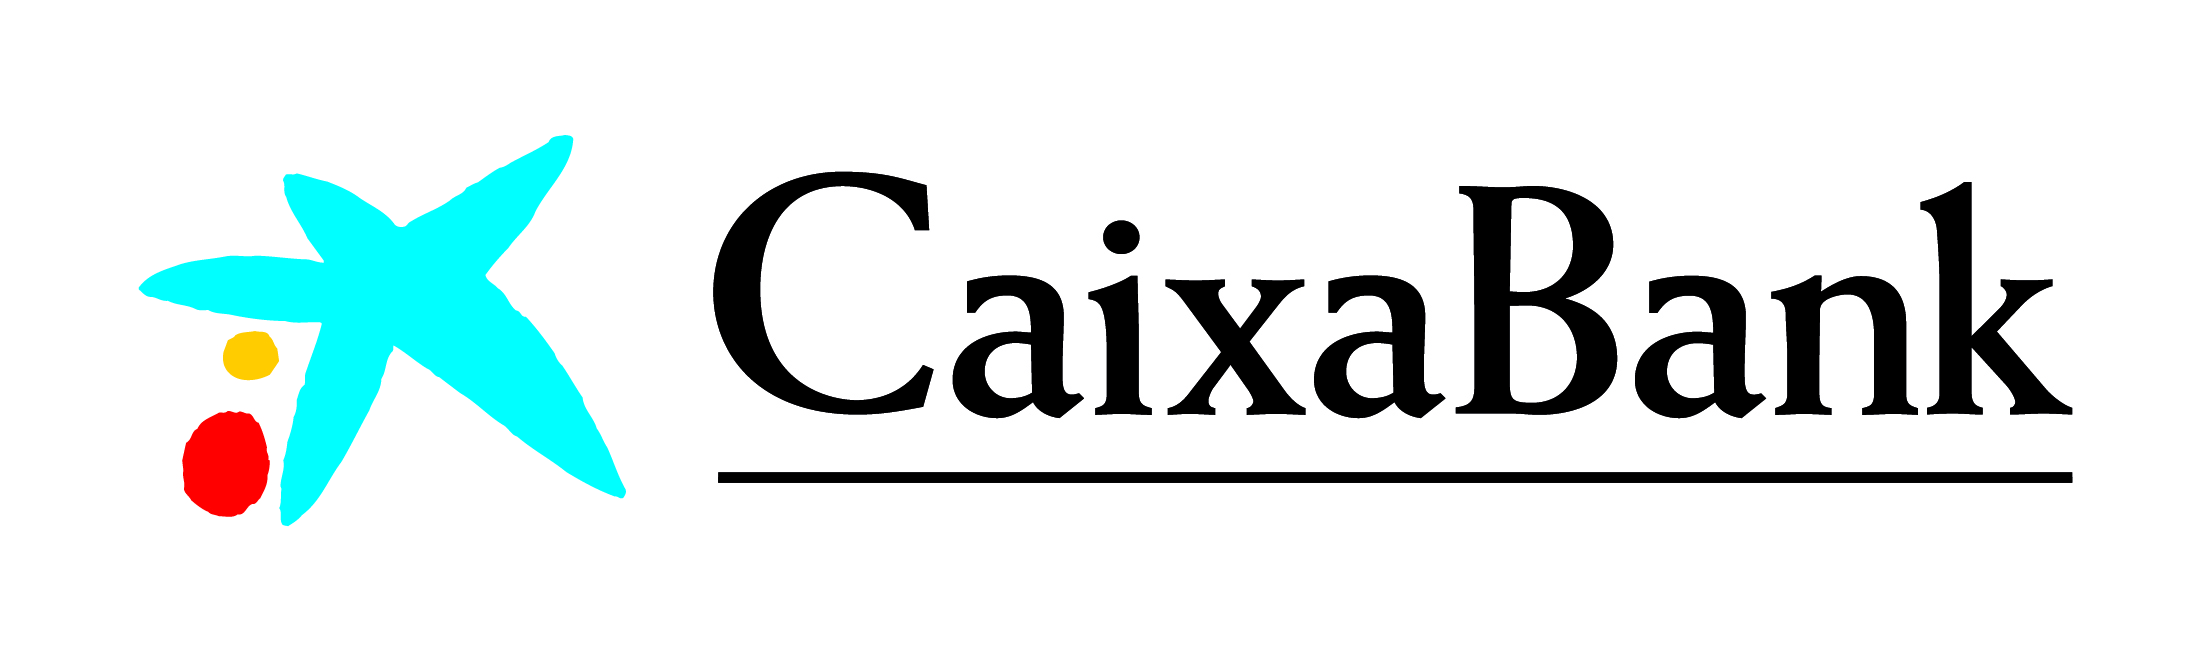 CaixaBank_logo_color_CMYK_horizontal_300dpi_fondo_blanco